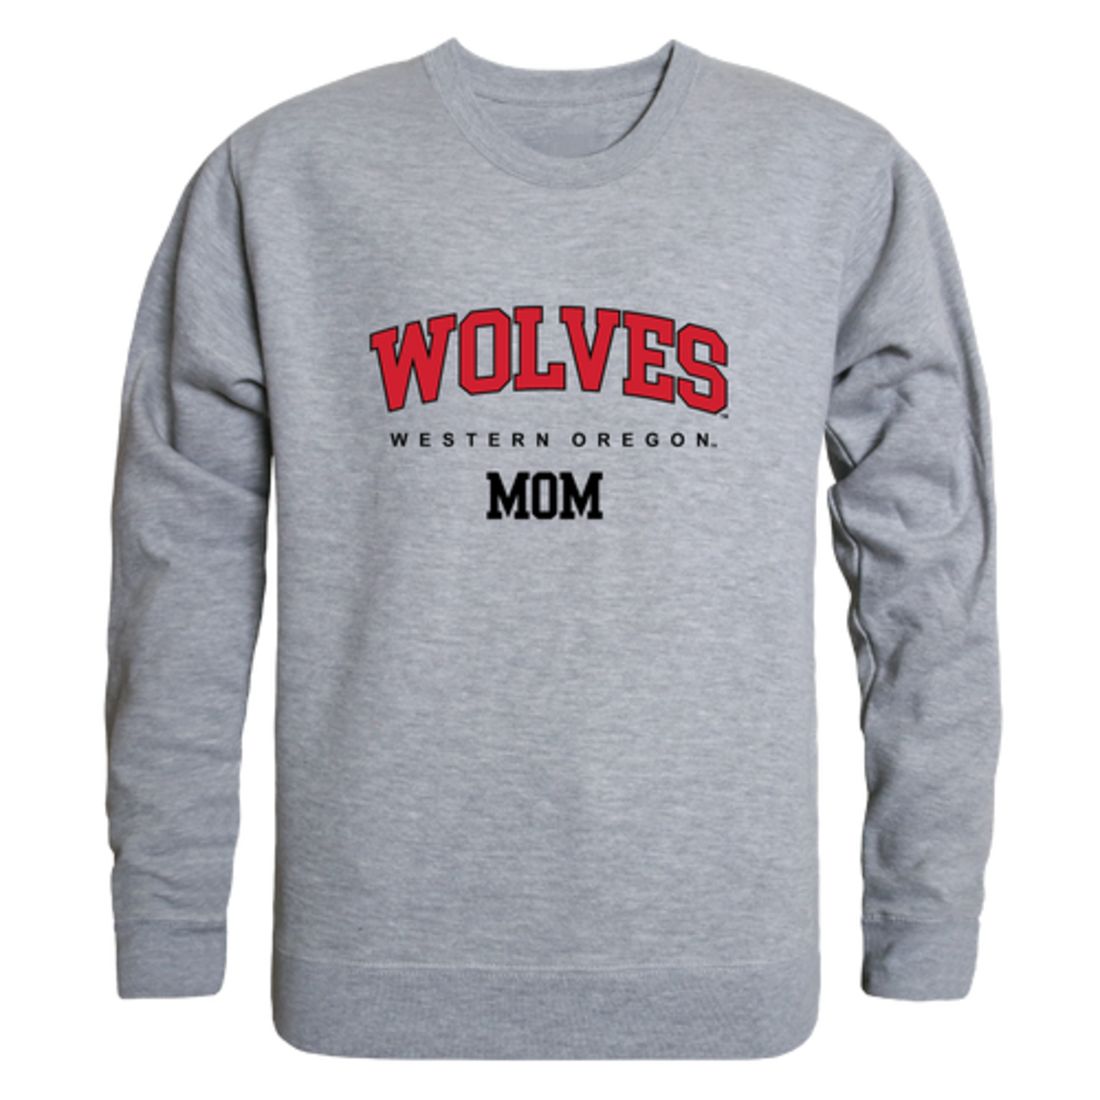 Western Oregon Wolves Mom Crewneck Sweatshirt